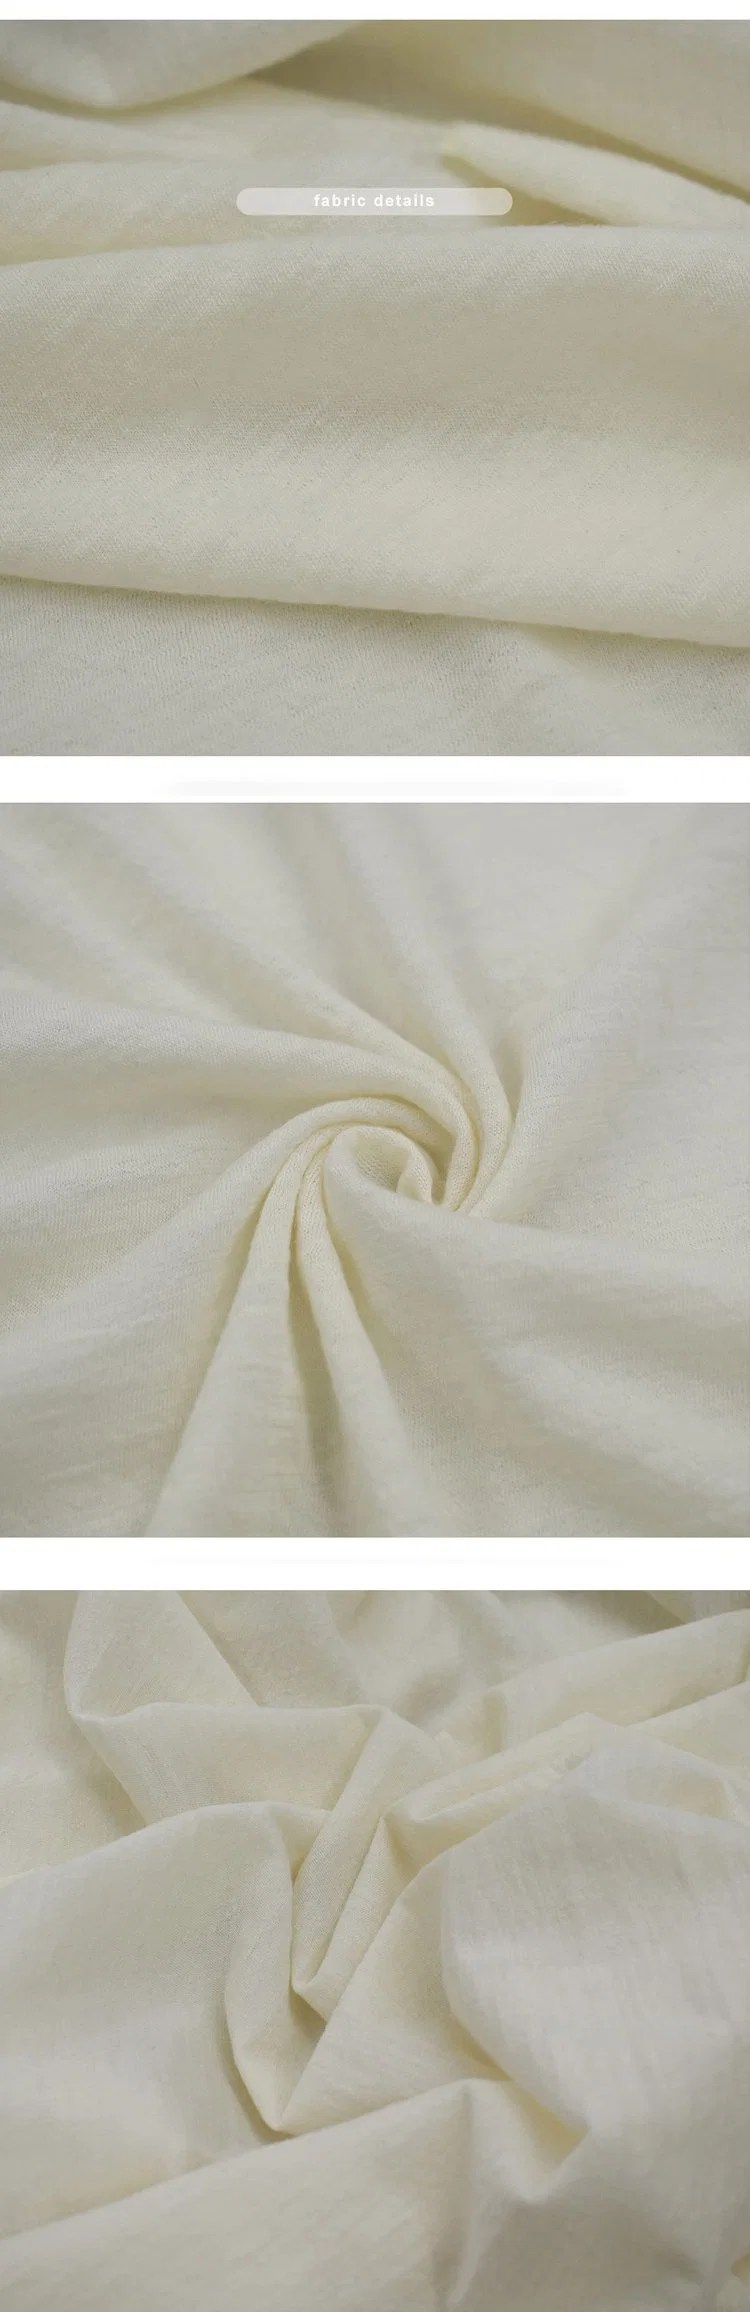 Heavyweight Breathable 55%Bamboo 45%Cotton Interwoven Fabric TNC Winter Jersey Fabric